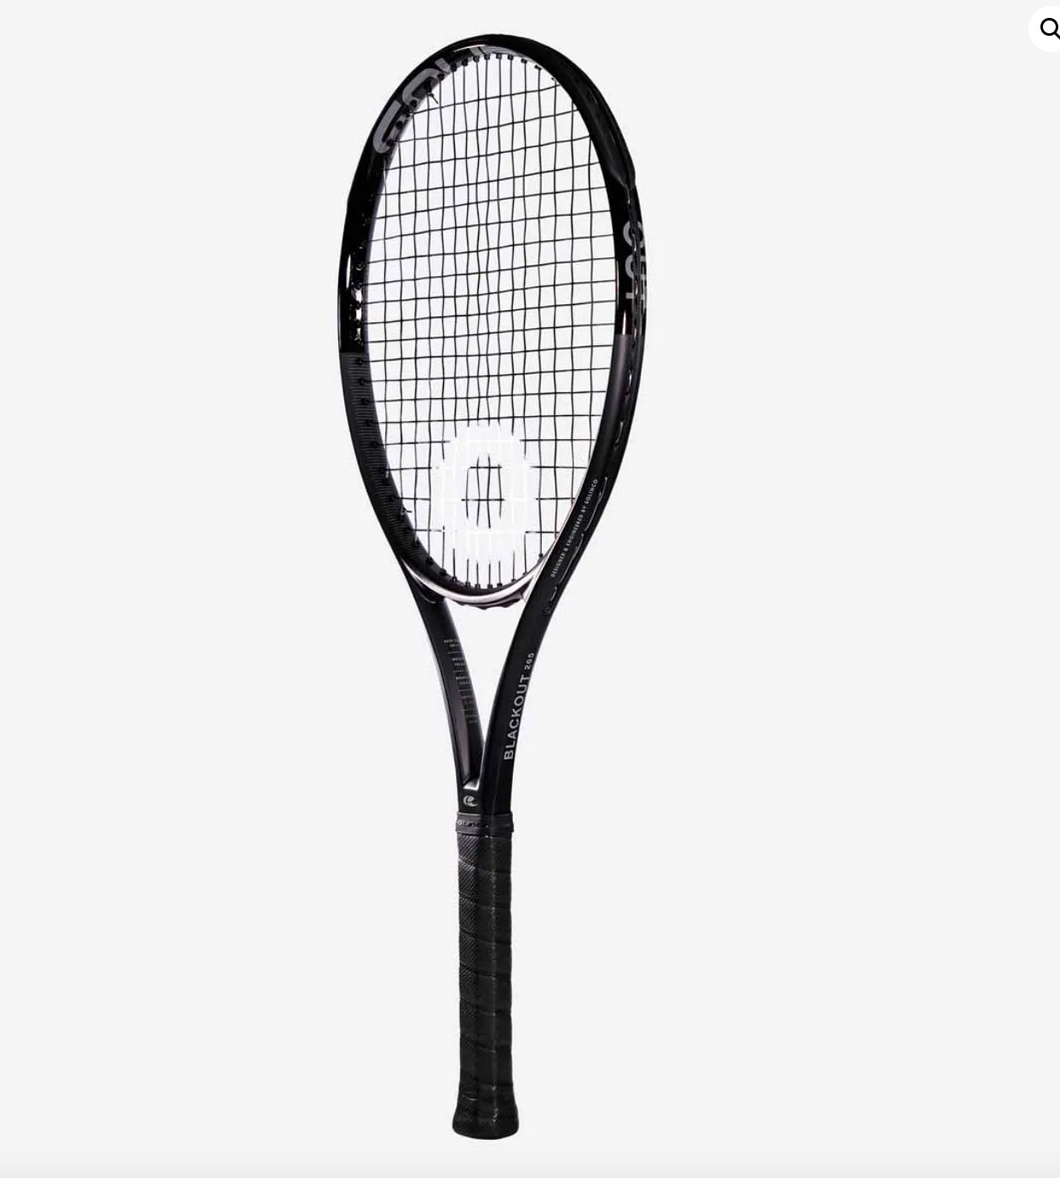 Solinco Blackout 300 Tennis Racquet - I LOVE MY DOUBLES PARTNER!!!